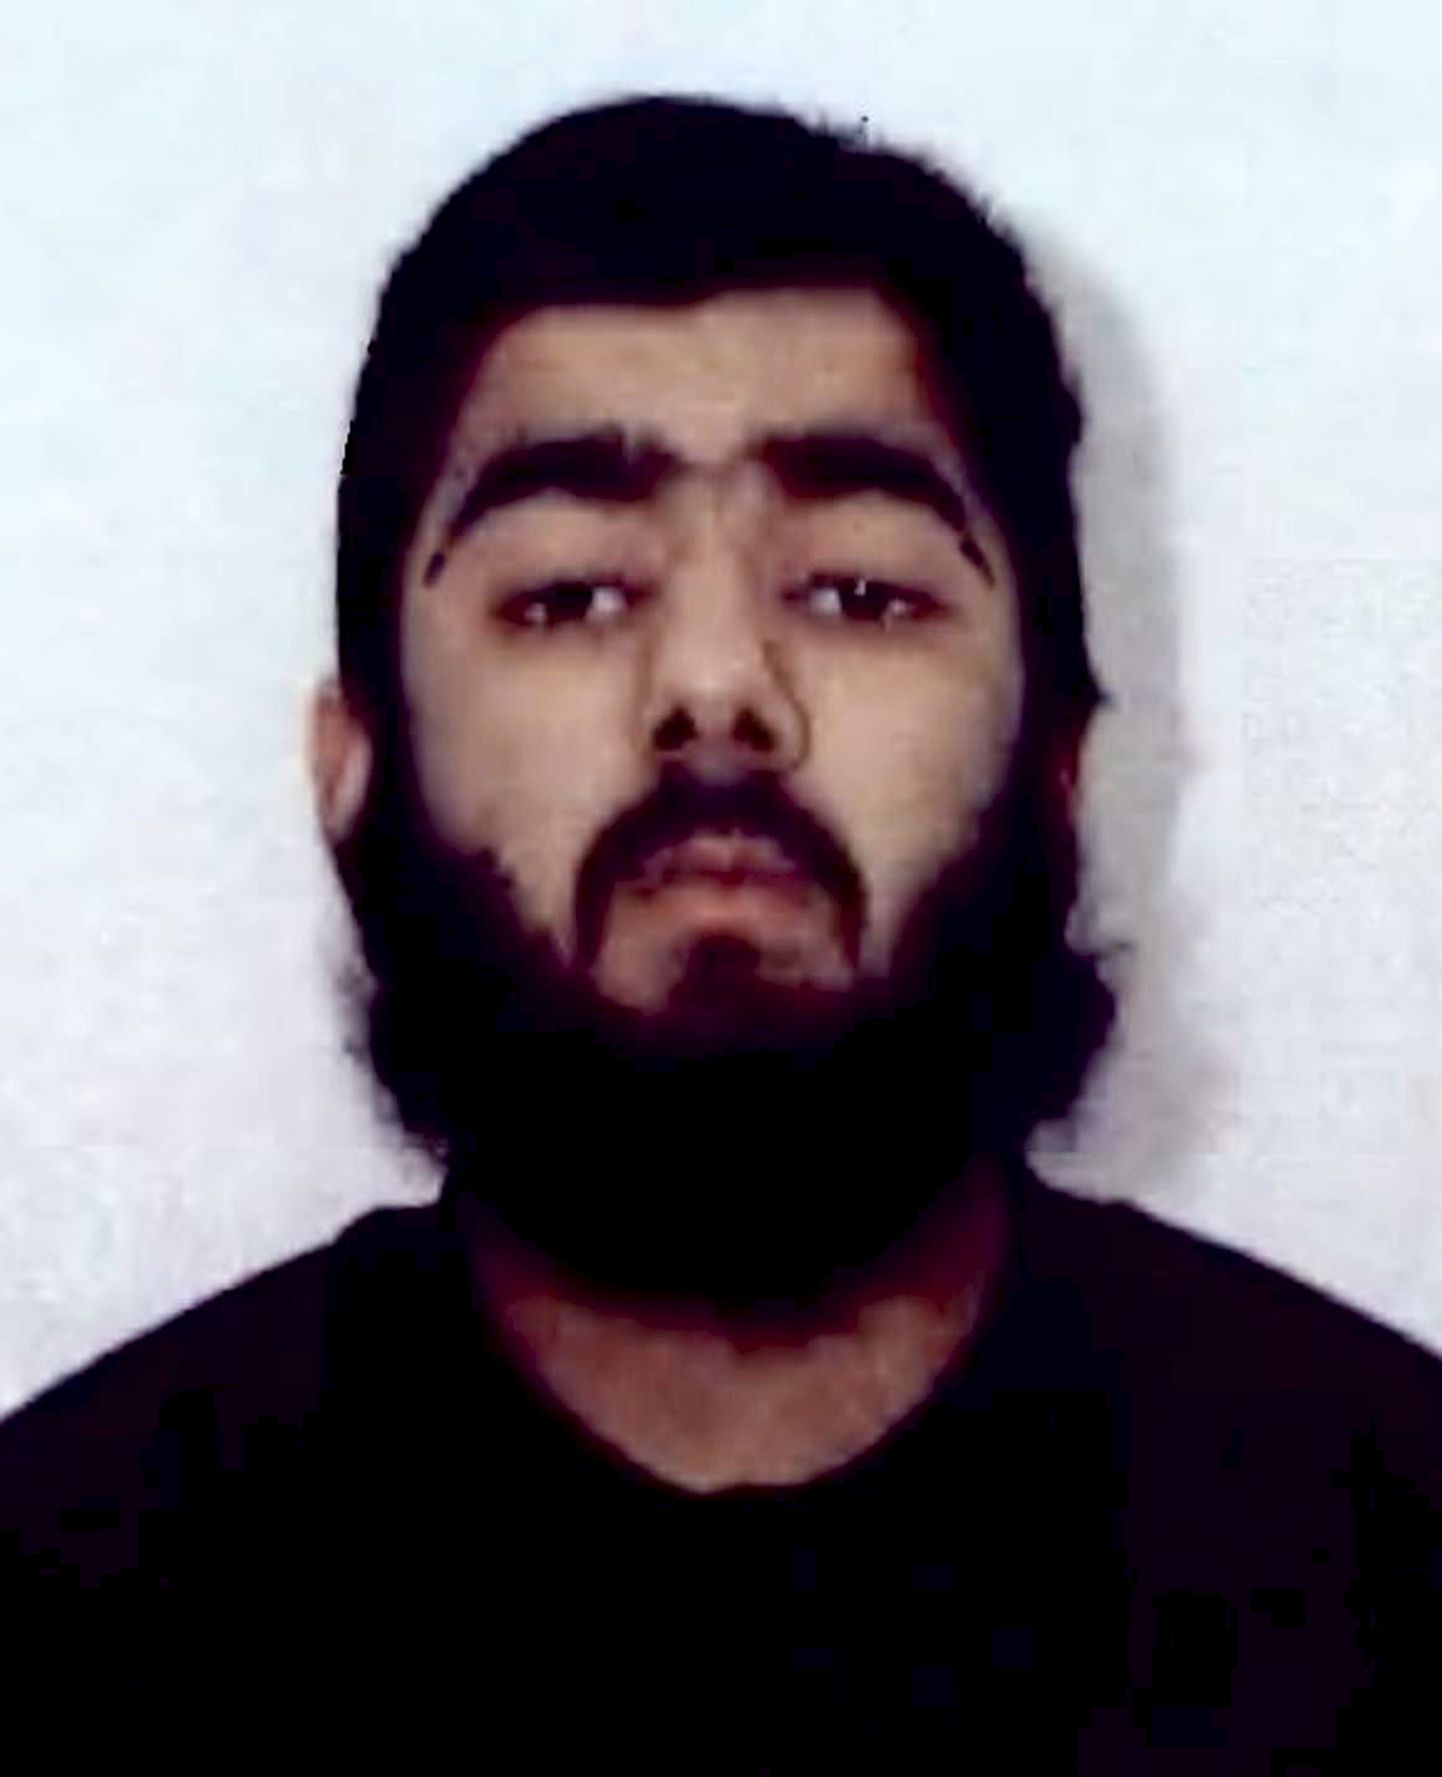 Terrorist Usman Khan.